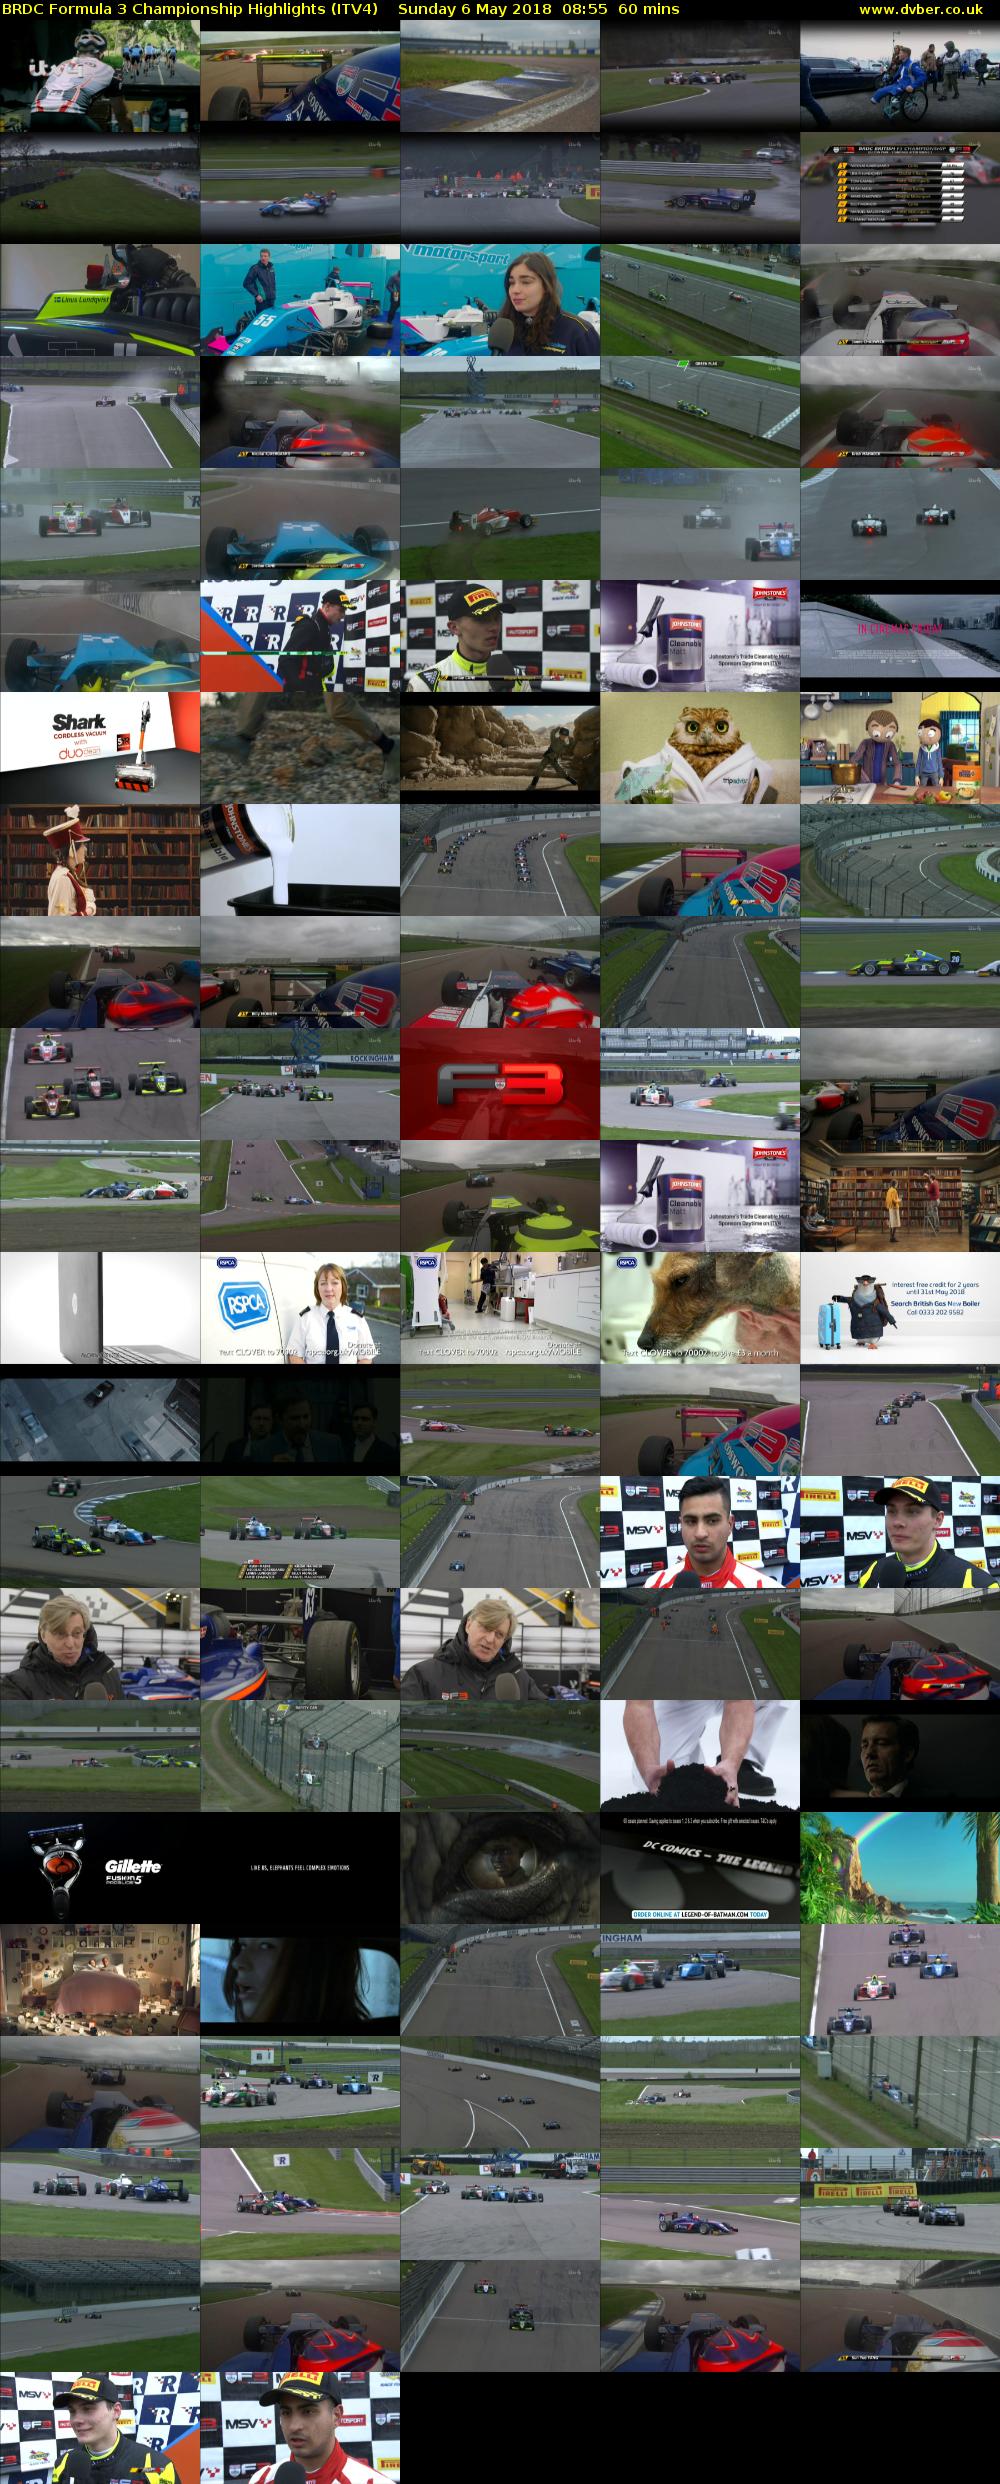 BRDC Formula 3 Championship Highlights (ITV4) Sunday 6 May 2018 08:55 - 09:55